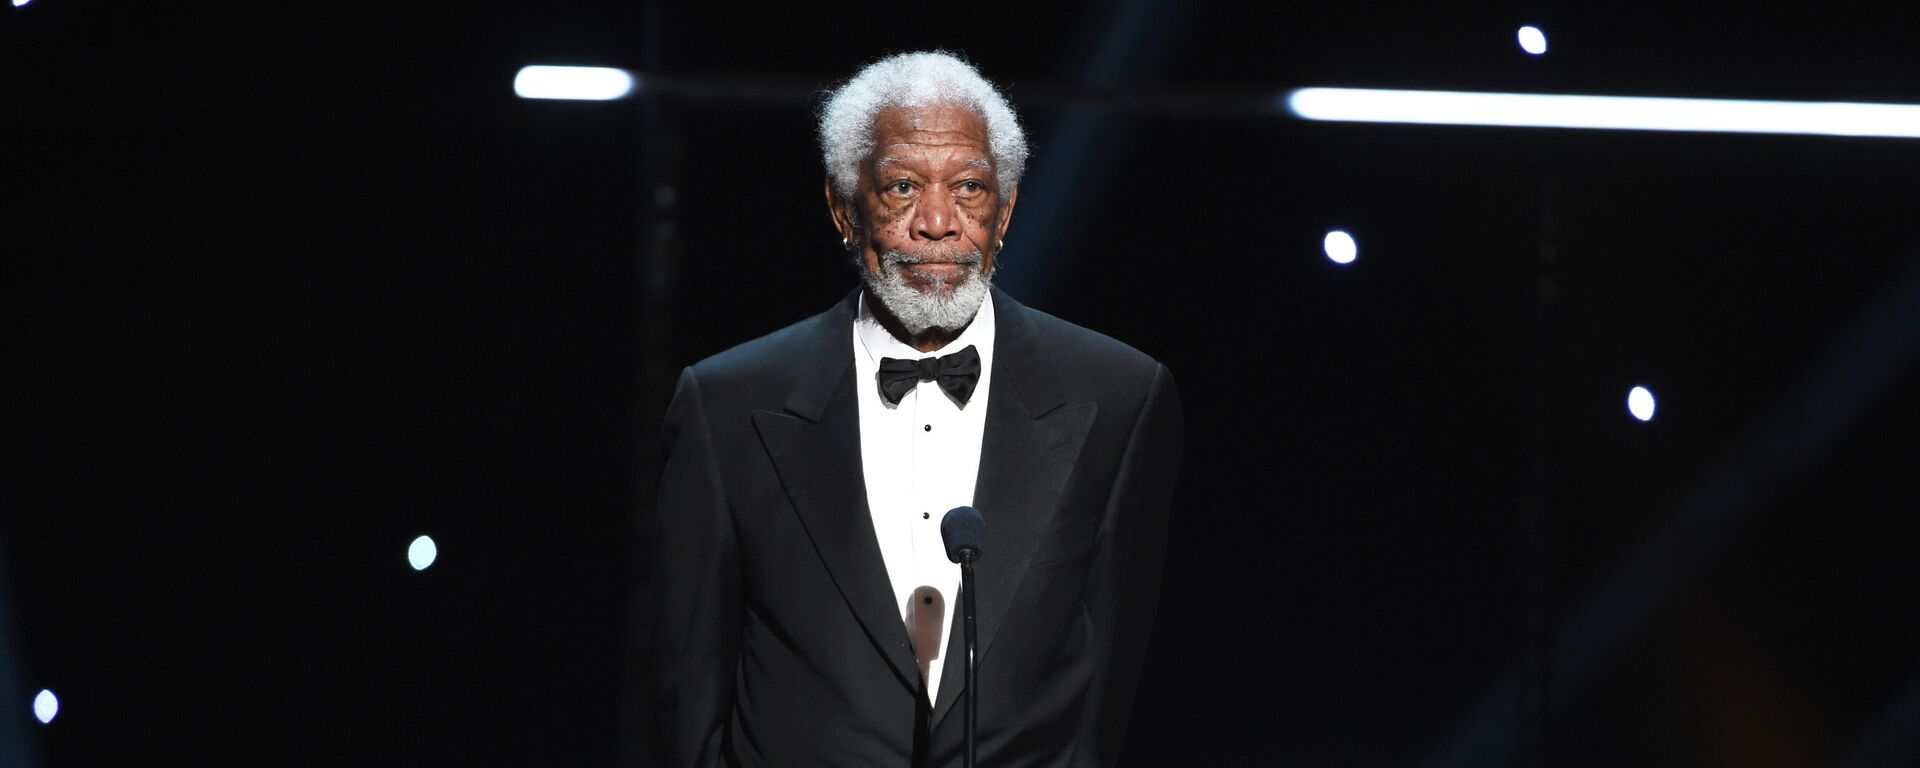 Morgan Freeman speaks on stage at the 51st NAACP Image Awards at the Pasadena Civic Auditorium on Saturday, Feb. 22, 2020, in Pasadena, Calif. - Sputnik International, 1920, 10.10.2021